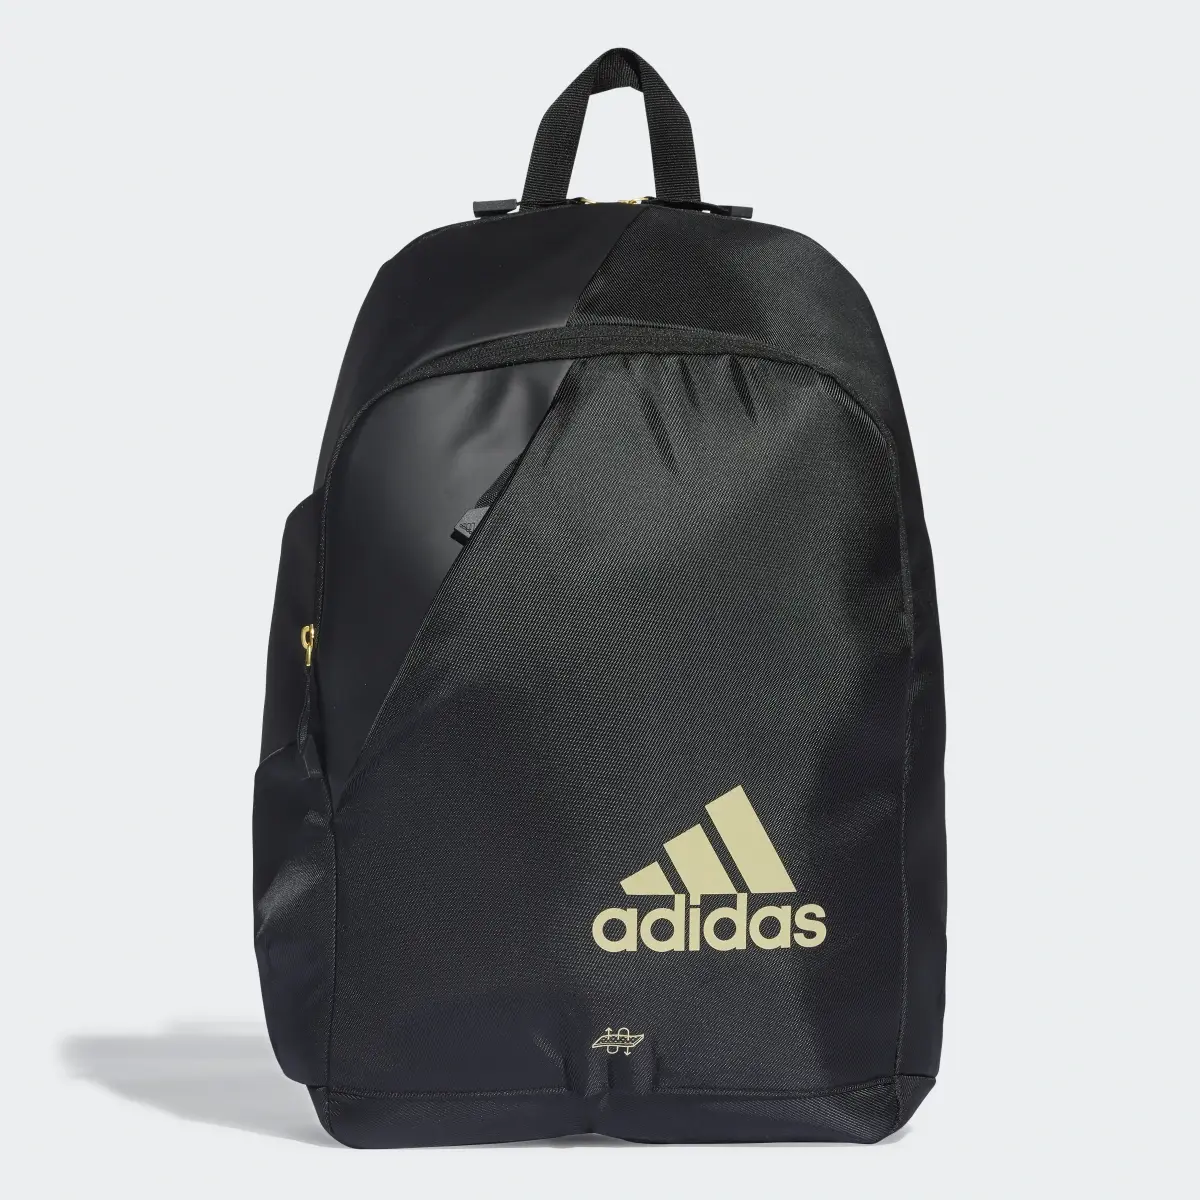 Adidas VS.6 Black/Gold Backpack. 1